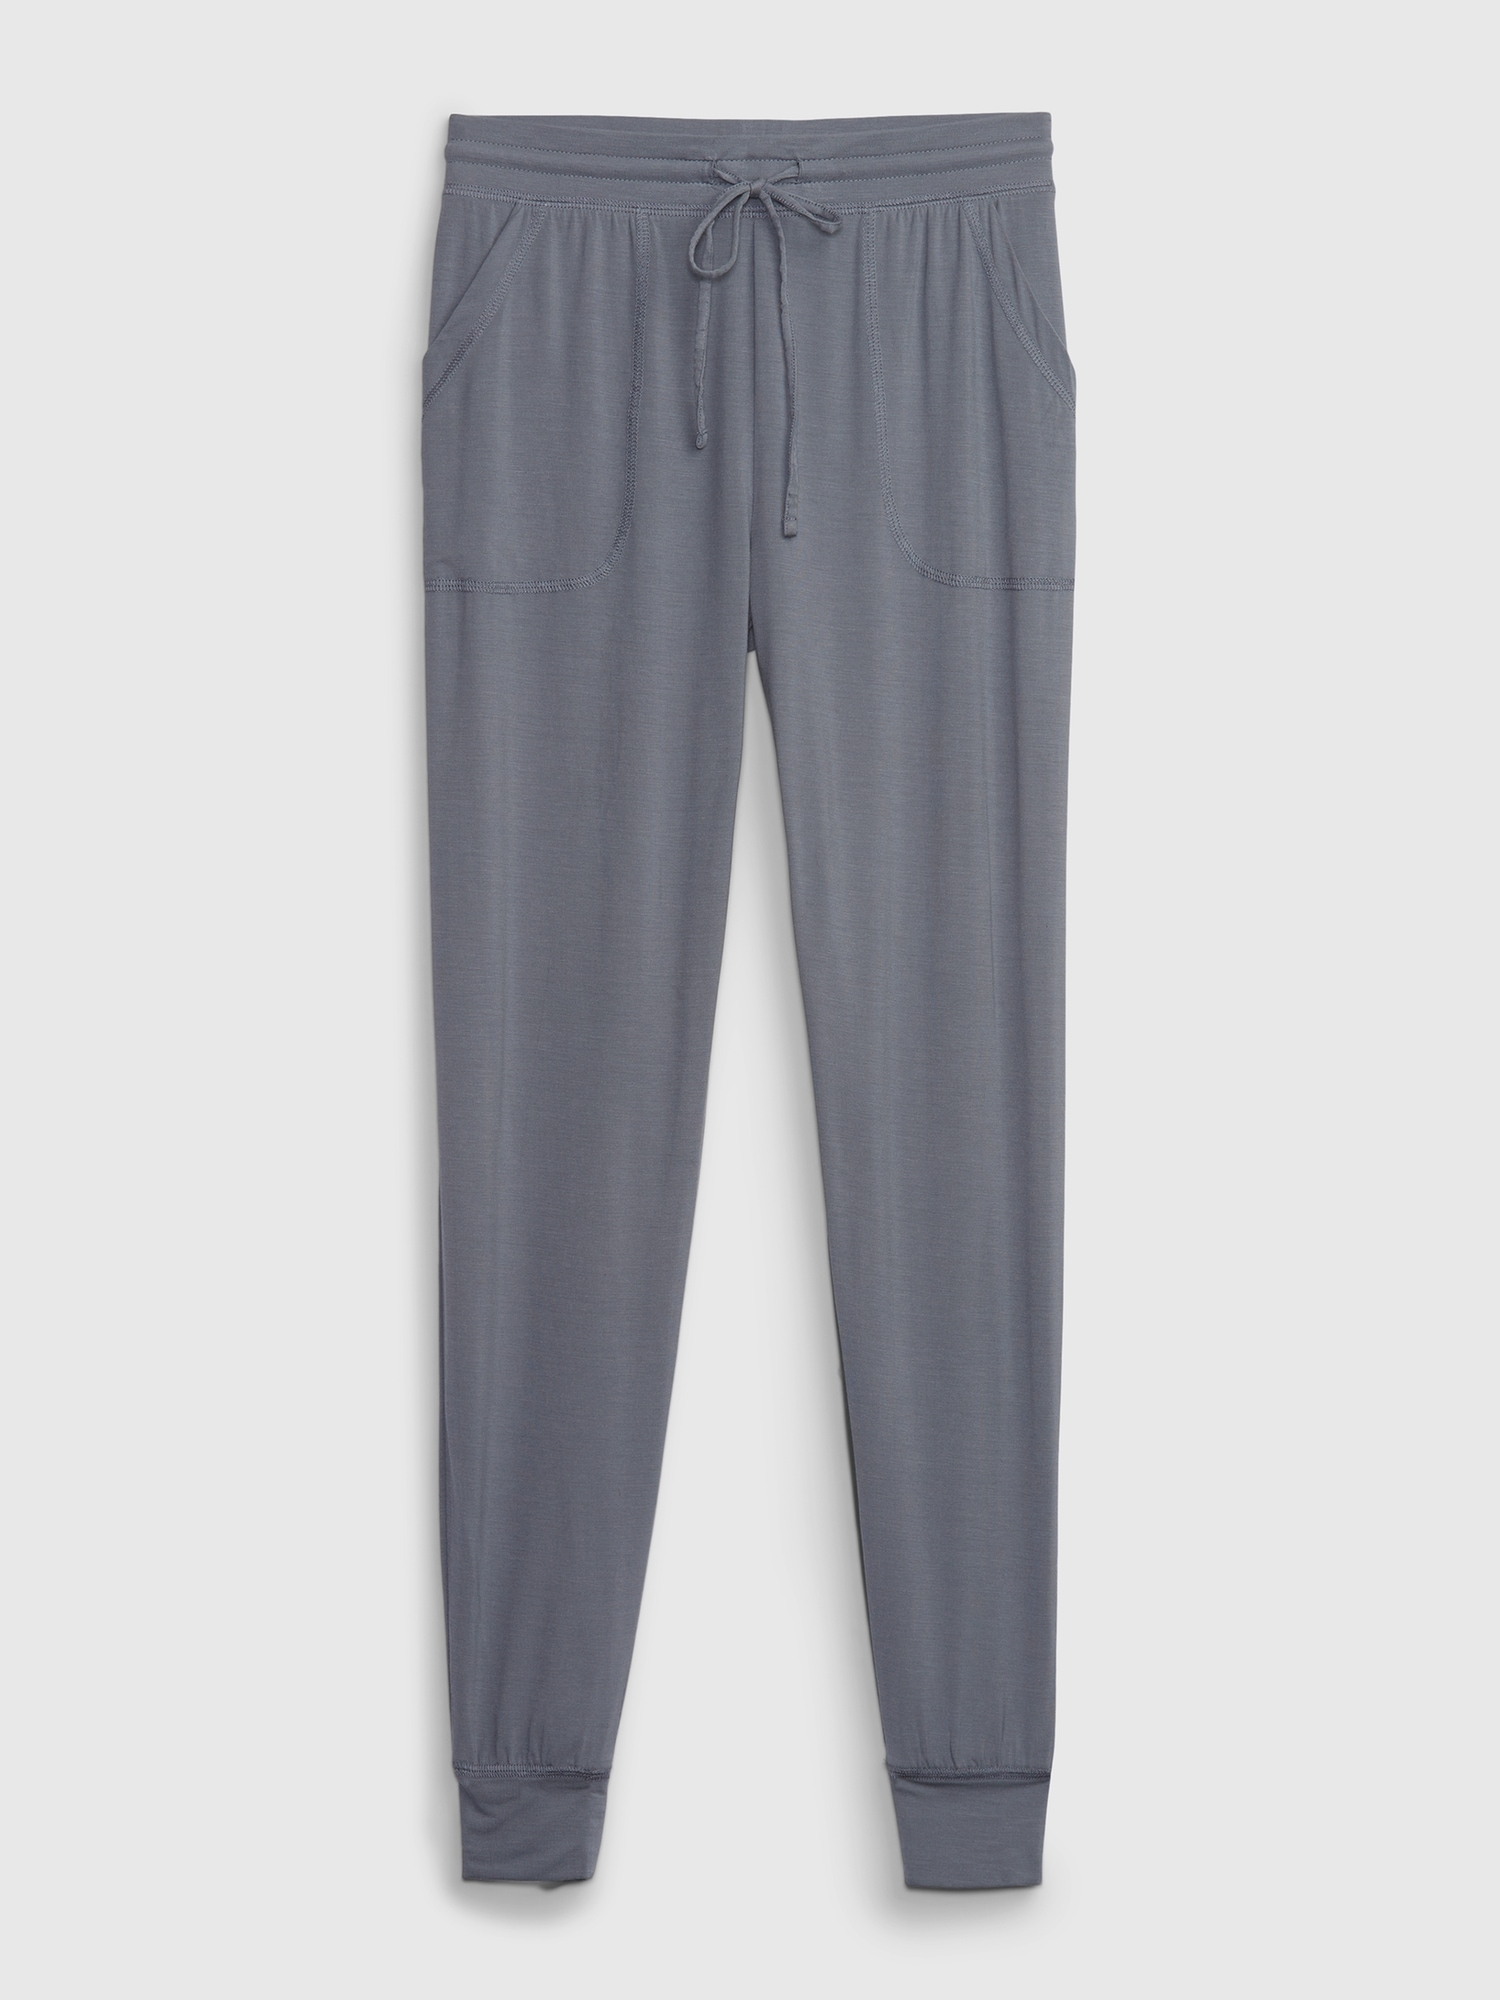 Modal Pajama Joggers | Gap